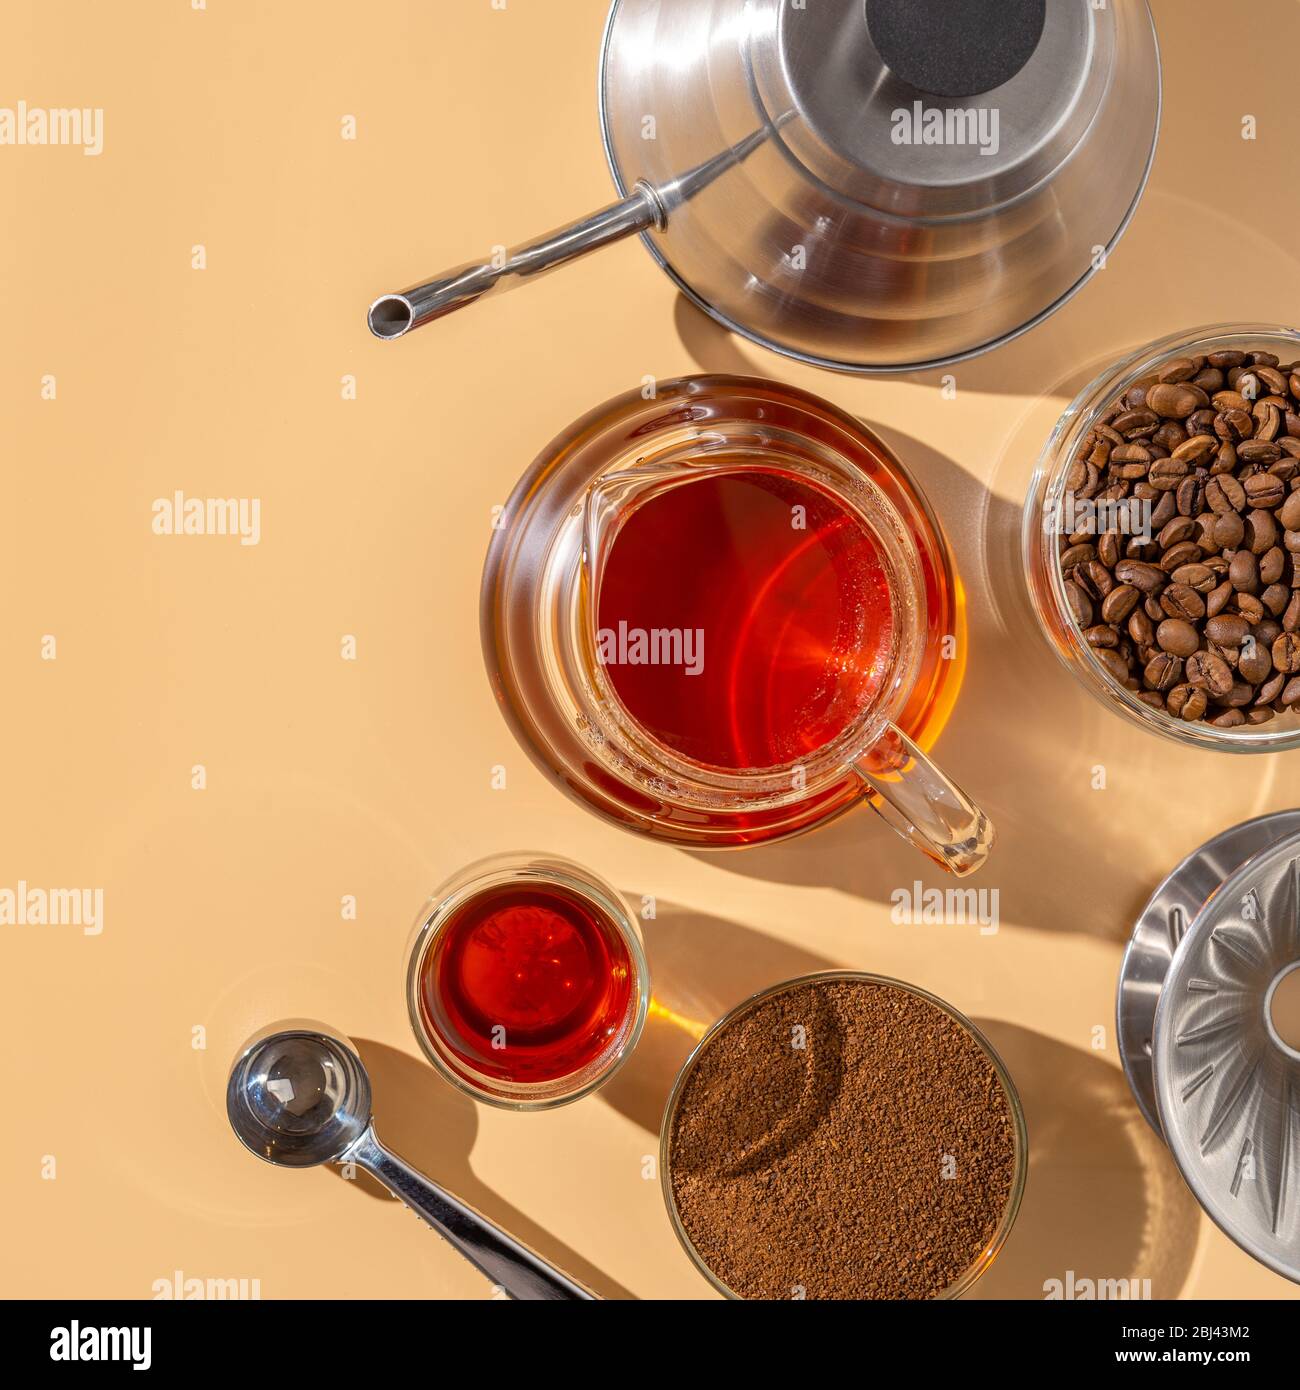 https://c8.alamy.com/comp/2BJ43M2/glass-teapot-with-freshly-brewed-coffee-alternative-method-pour-over-coffeehard-light-beige-background-2BJ43M2.jpg